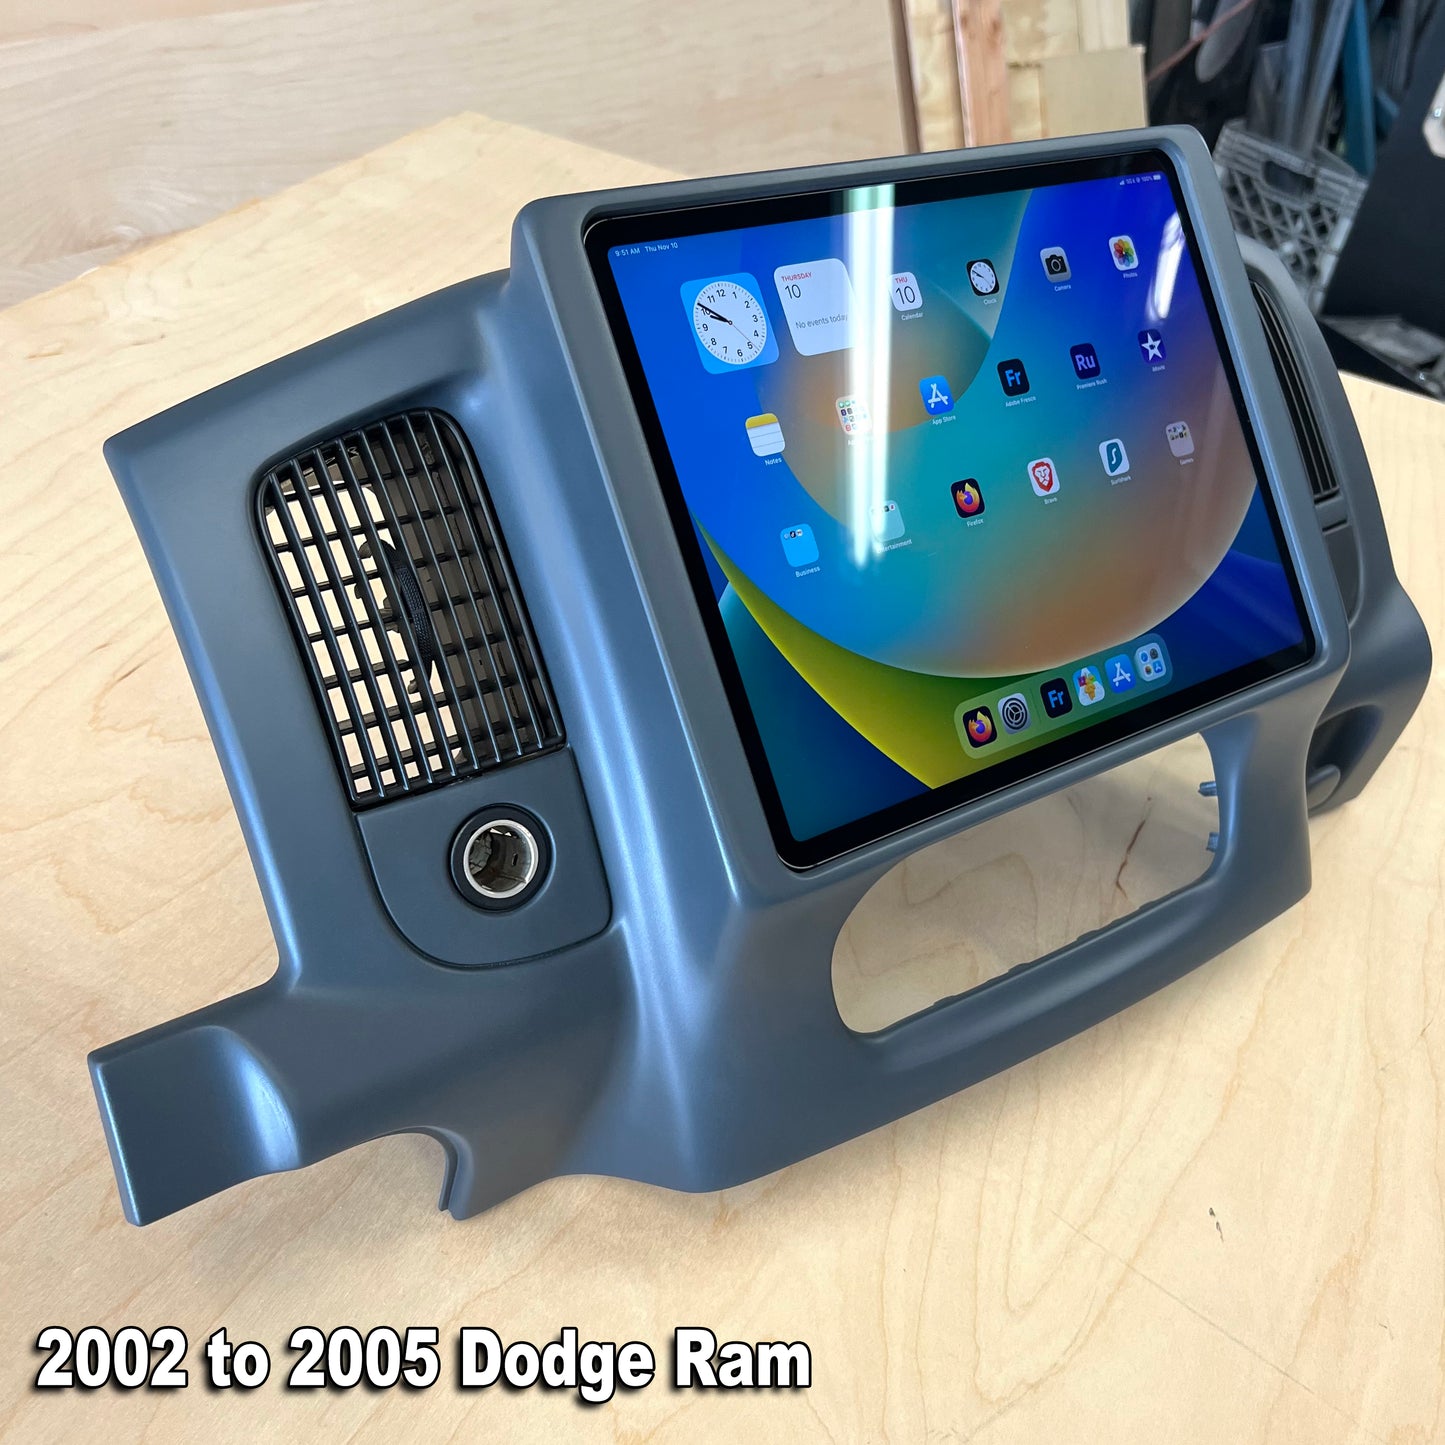 Dodge/Ram Trucks custom dash mod service - ALL YEARS